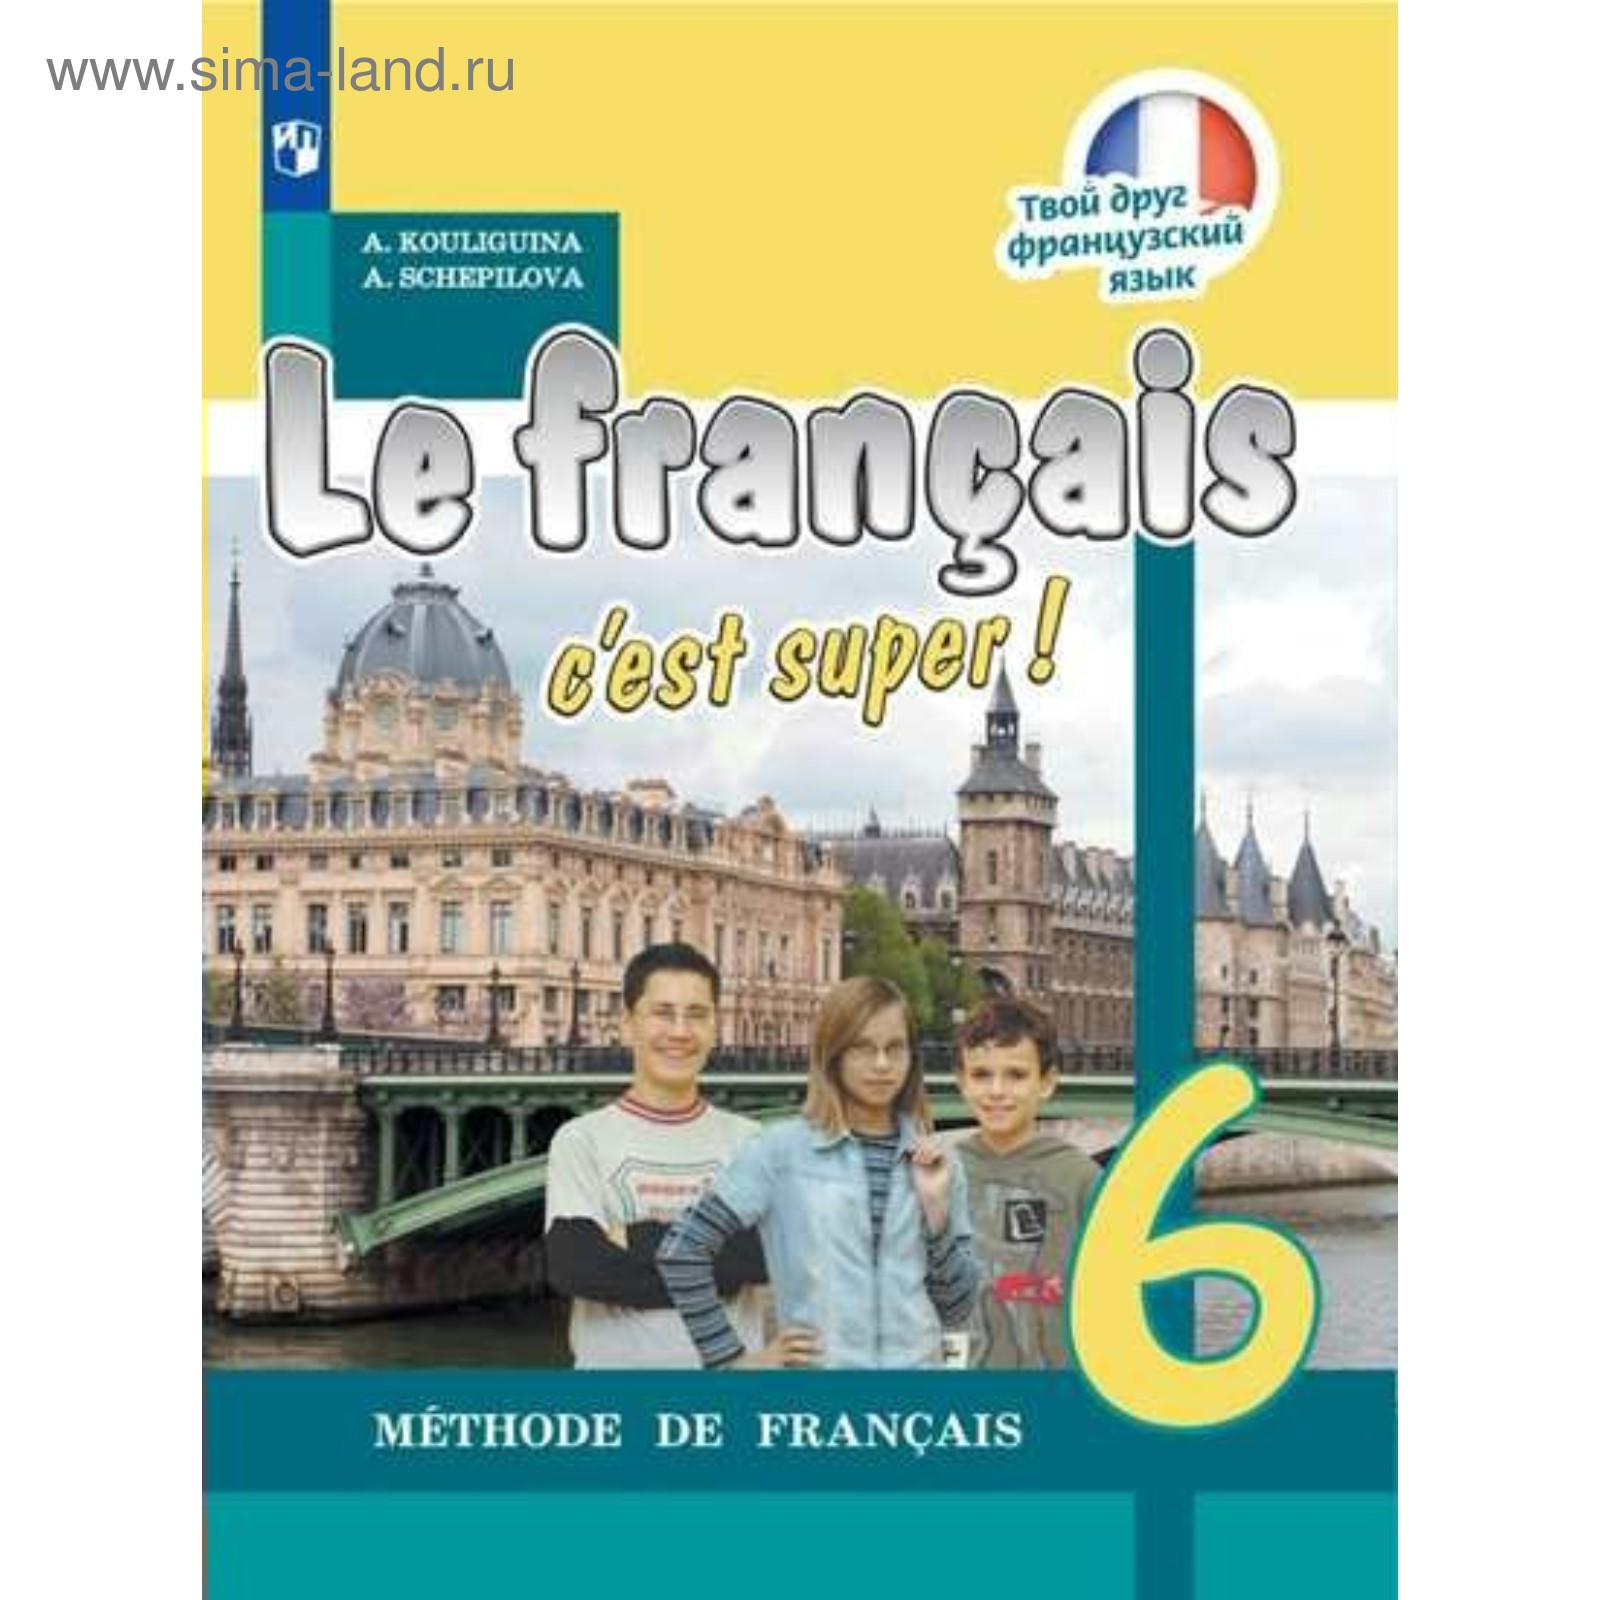 Le francais c est. Учебник по французскому языку. Французский язык 6 класс Кулигина. Твой друг французский учебник. Учебник французского языка 6 класс.